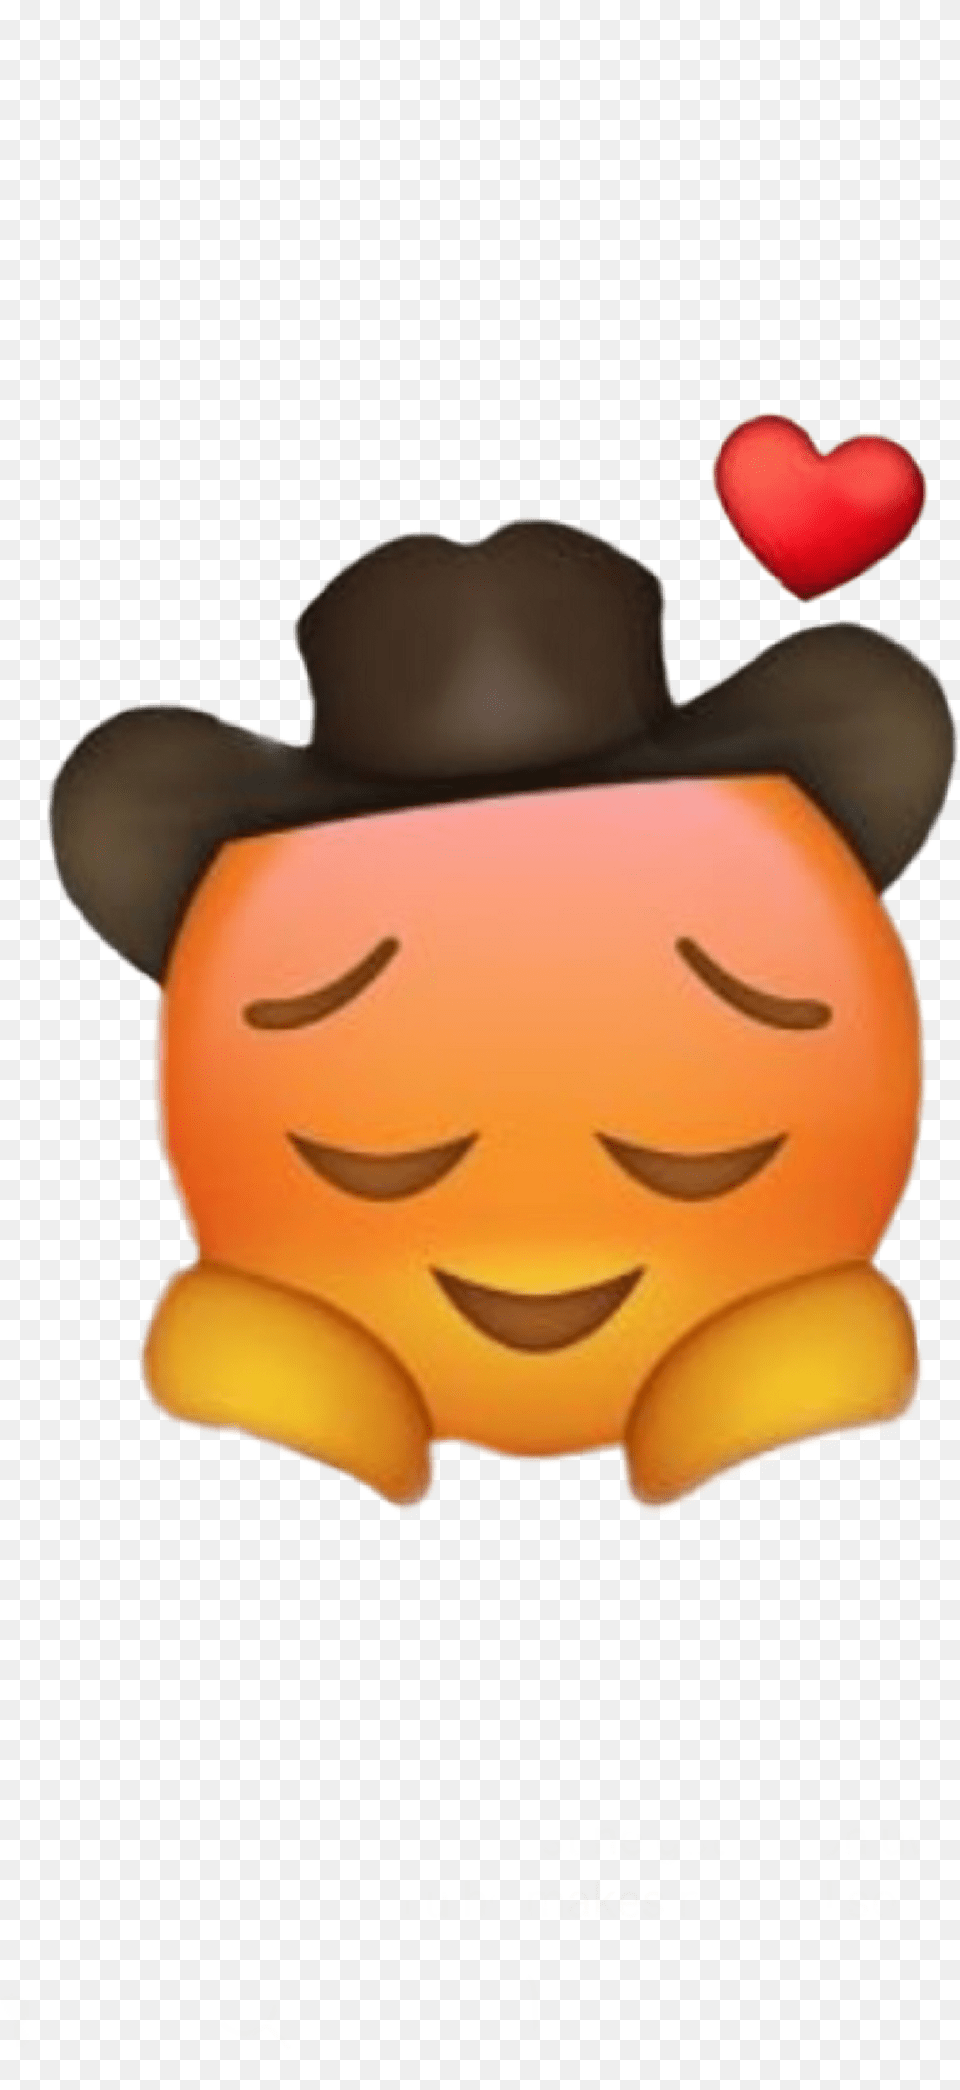 Download Hd Emoji Cowboy Cowboyemoji Emoji Cowboy With Heart, Clothing, Hat, Toy, Animal Png